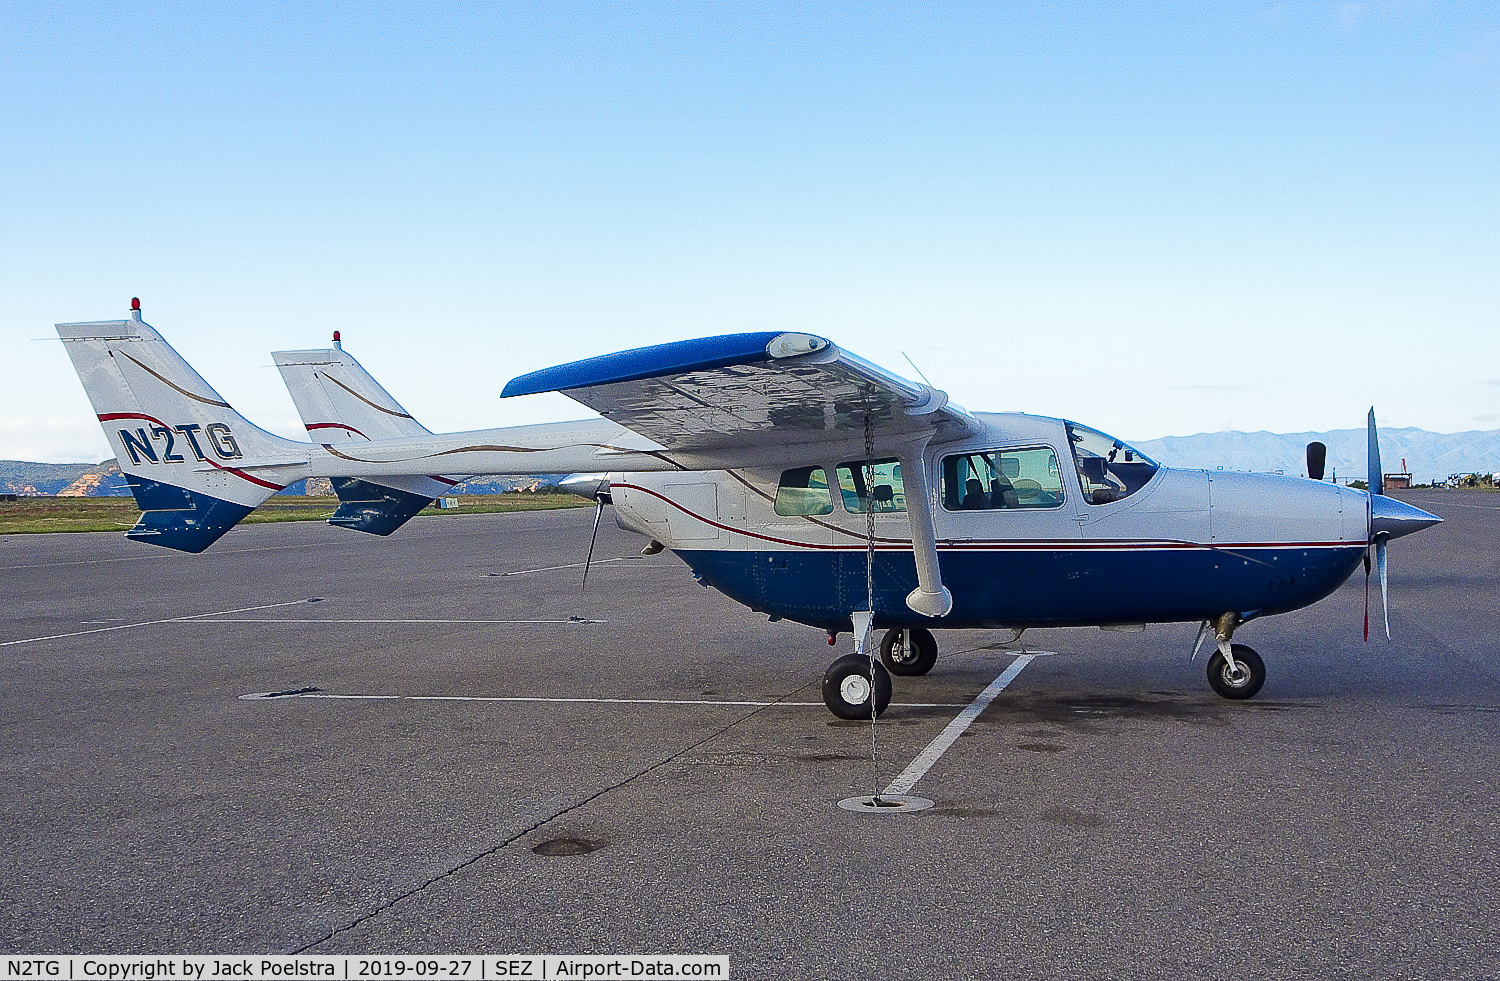 N2TG, 1969 Cessna T337D C/N 337-1064, N2TG at Sedona airport AZ